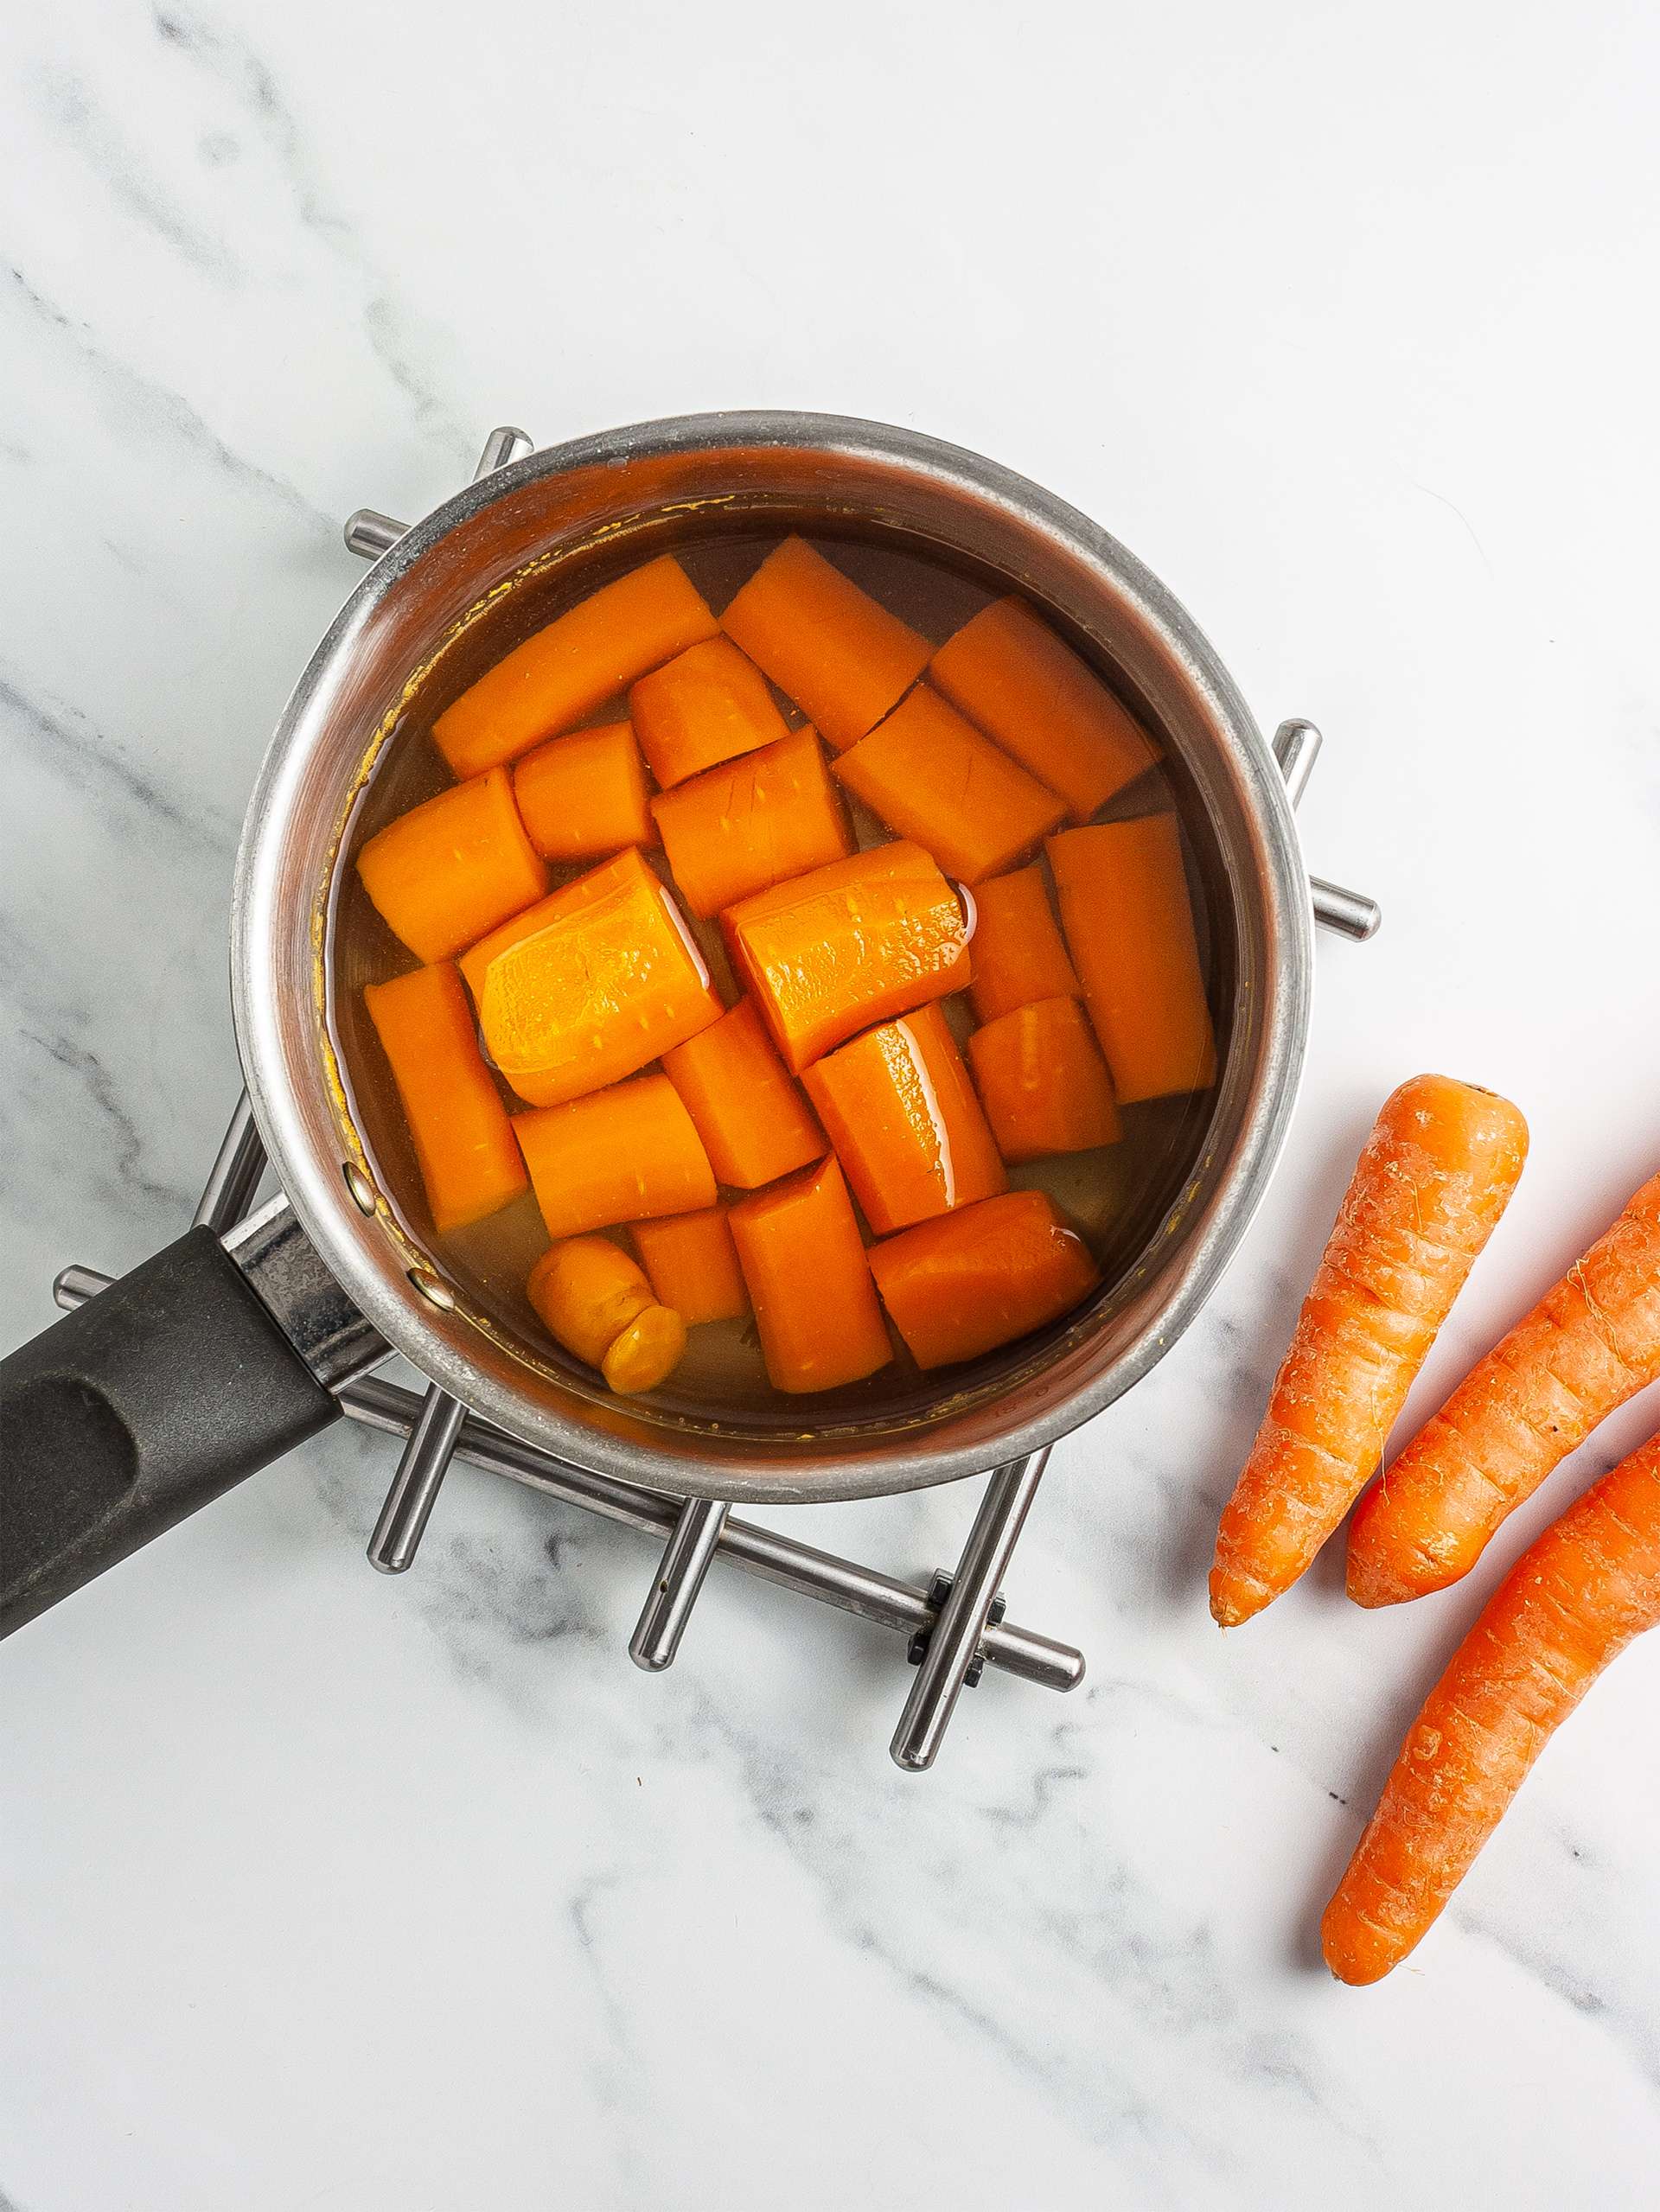 Boiled carrots